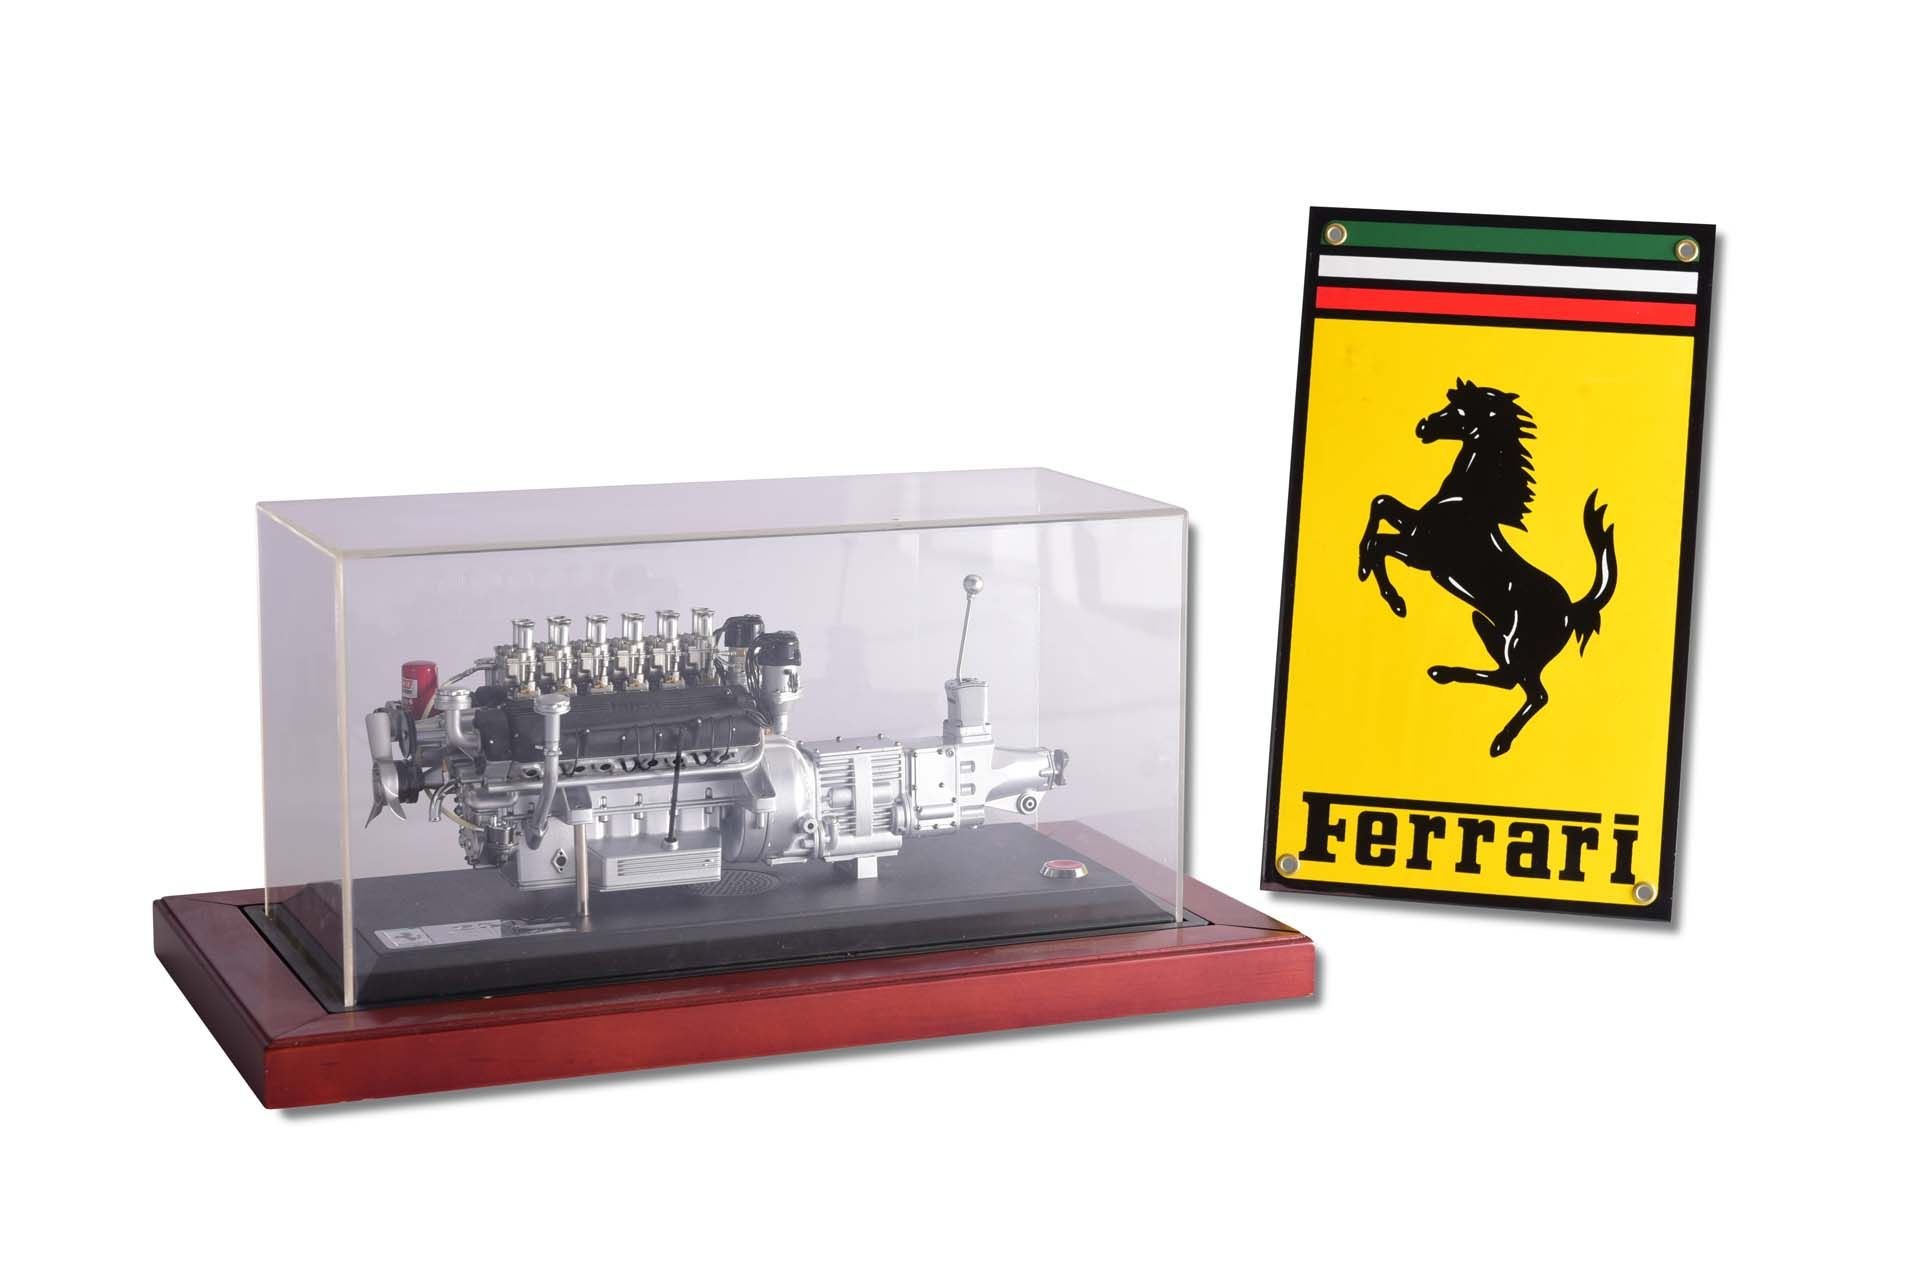 For Sale Ferrari Model Engine in Display Case and Small Metal Ferrari Sign